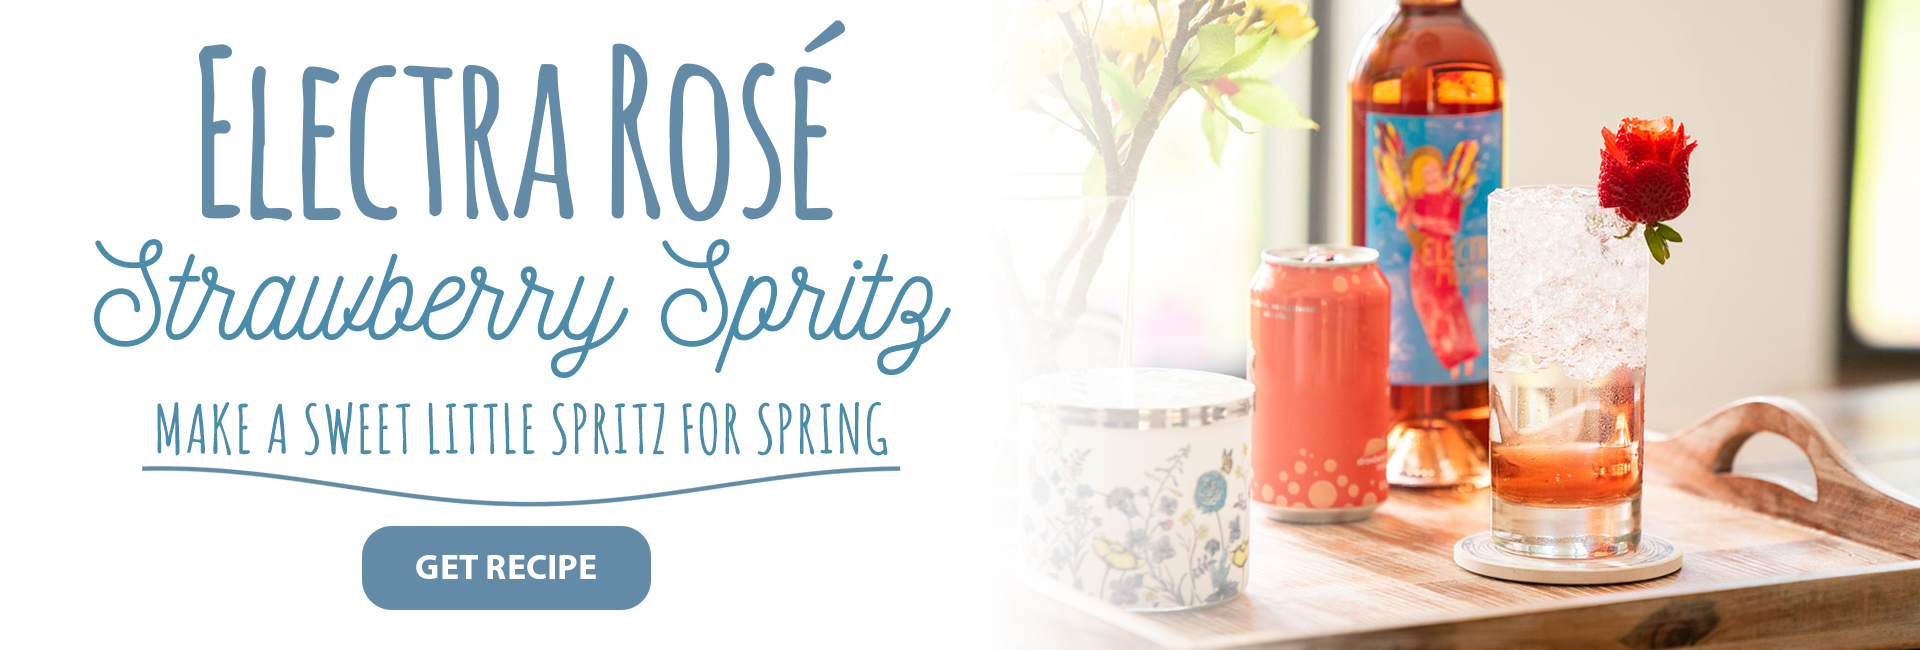 Electra Rose Strawberry Spritz - Make a sweet little spritz for spring